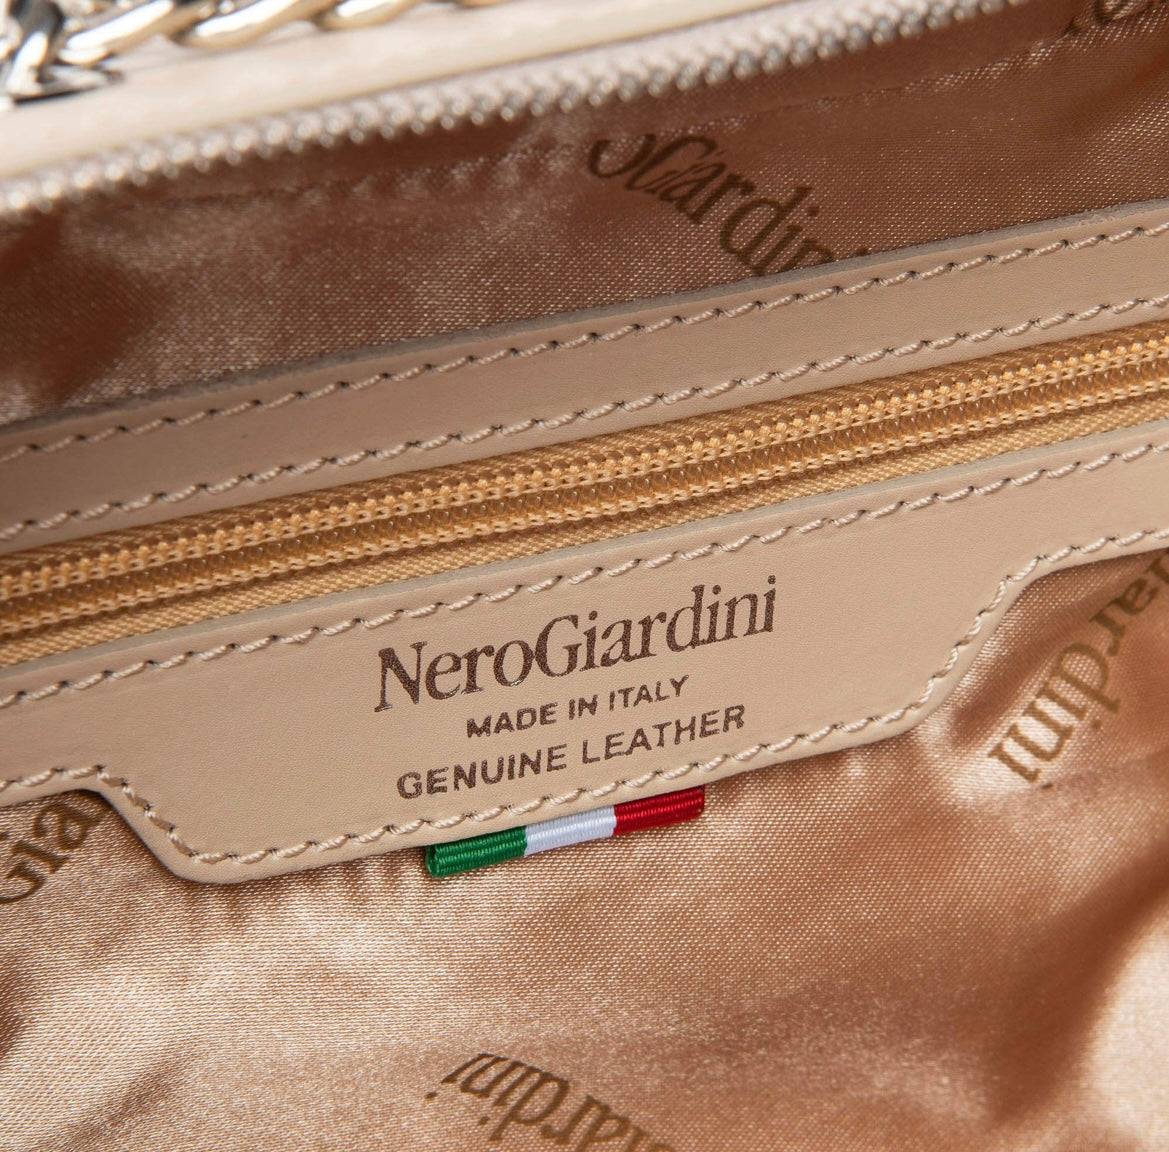 Nerogiardini leather shoulder handbag